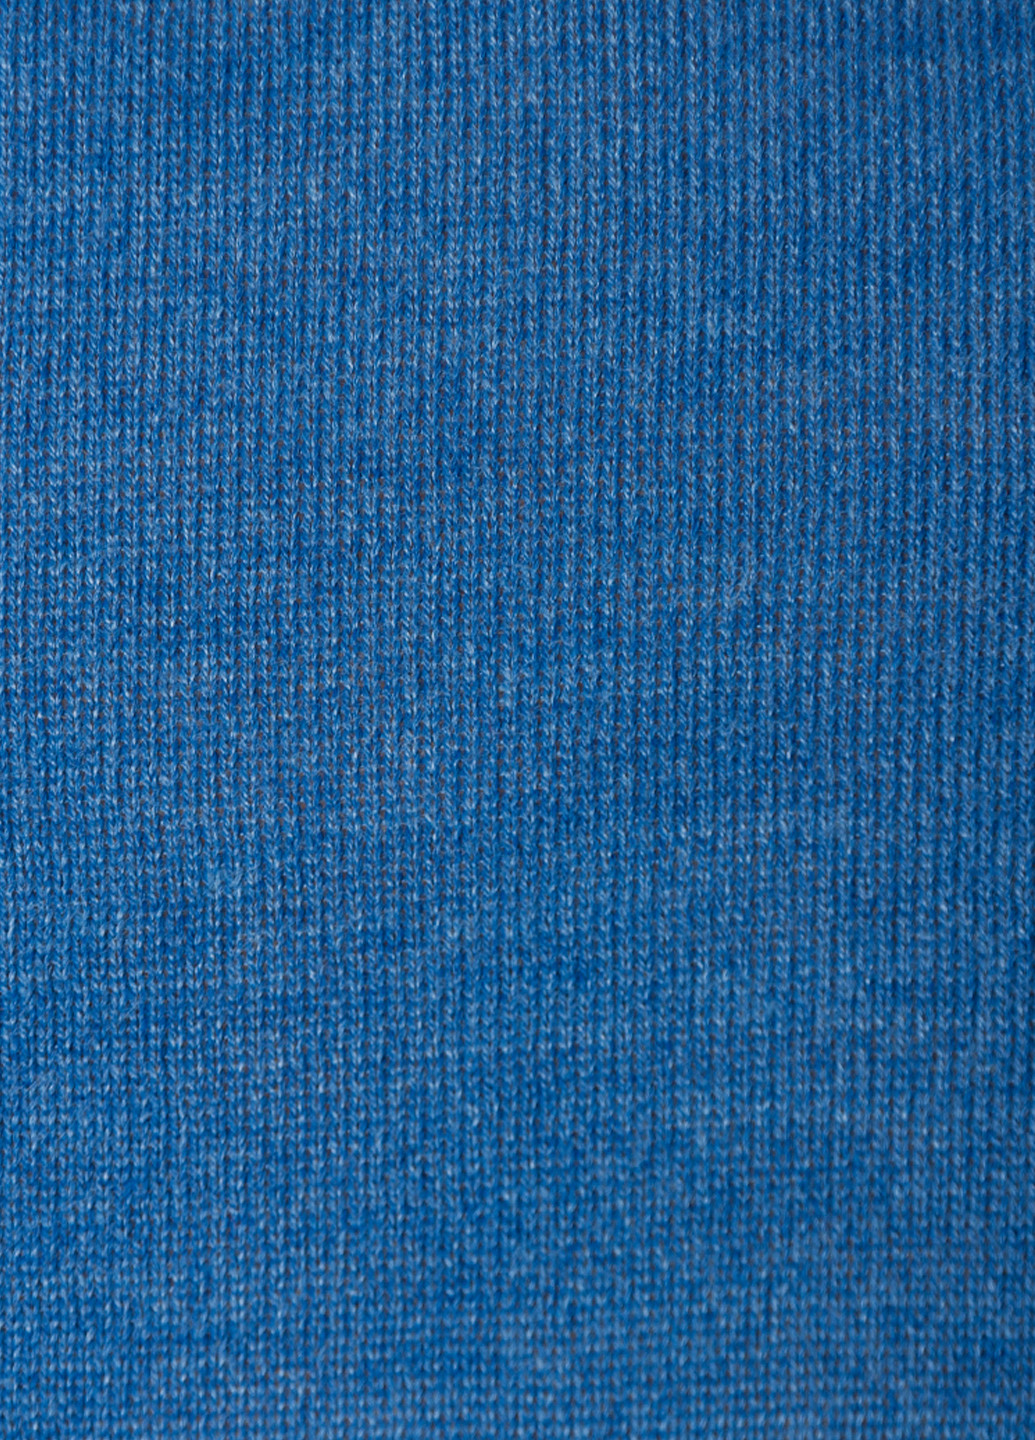 Синий зимний пуловер мужской Arber Crew-neck FF N-AVT-49